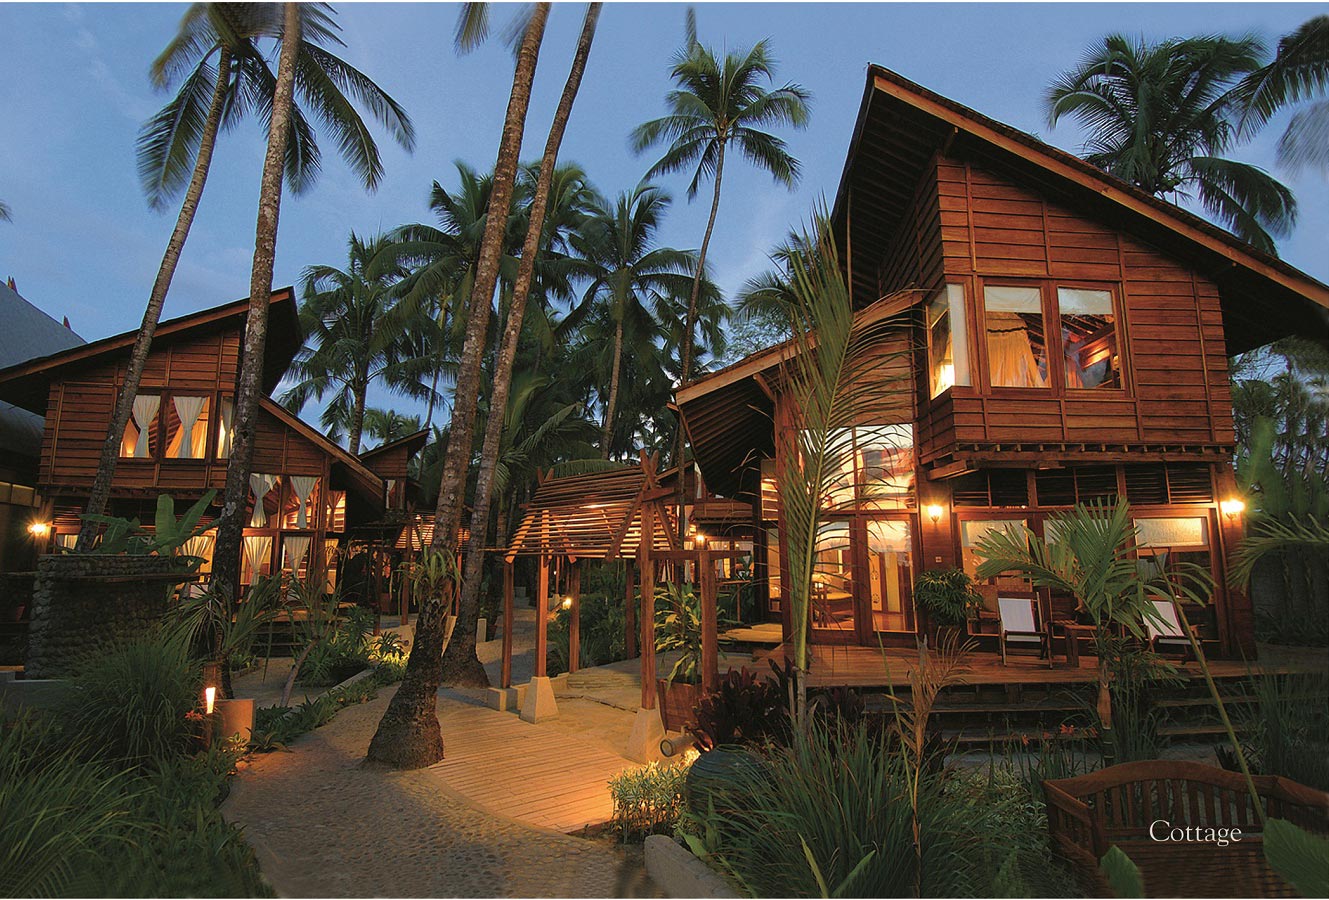 Amata Resort